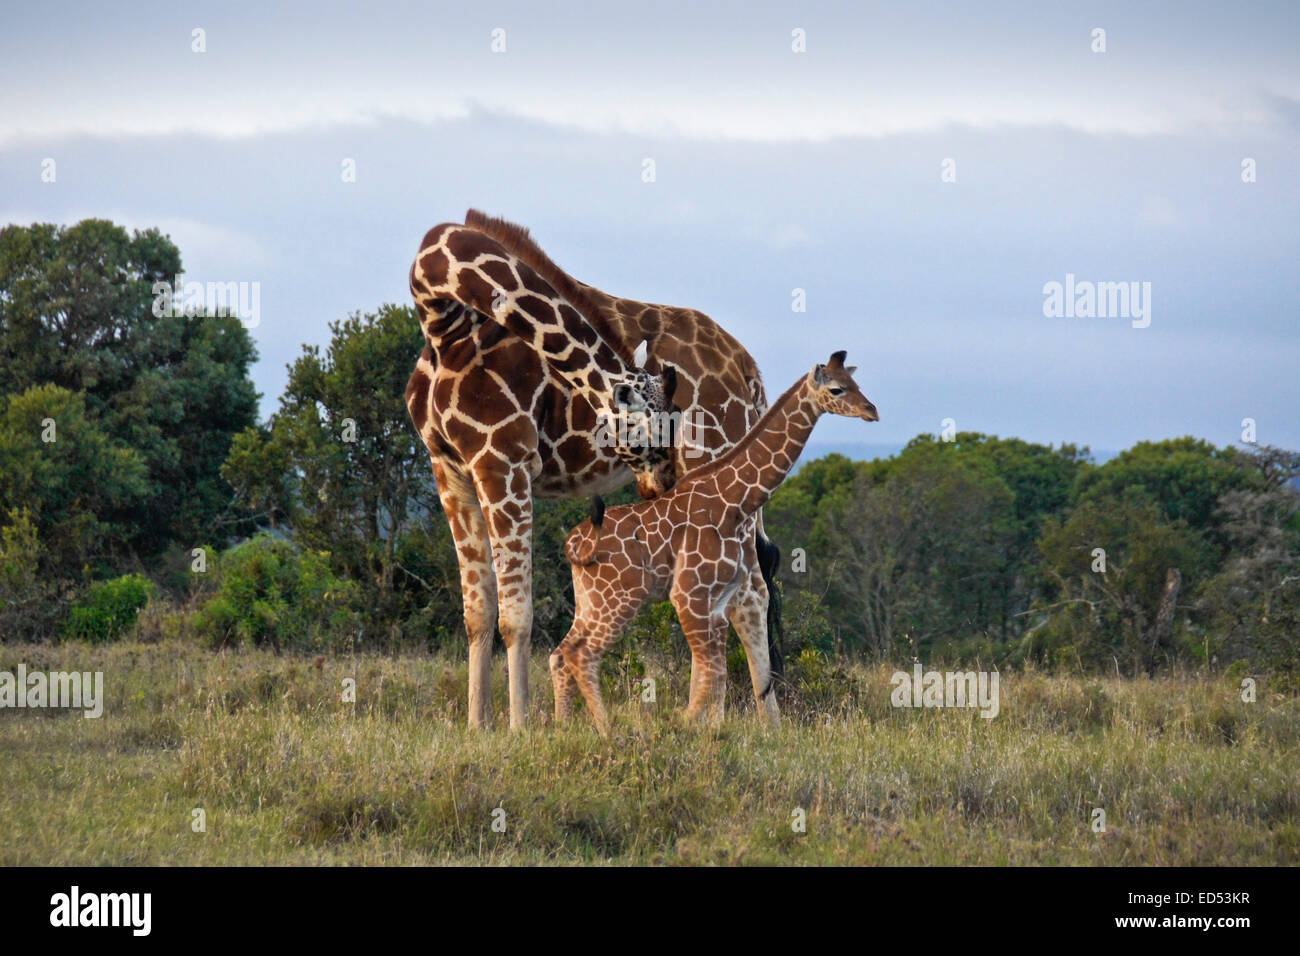 Reticulated giraffe nuzzling her calf, Ol Pejeta Conservancy, Kenya Stock Photo